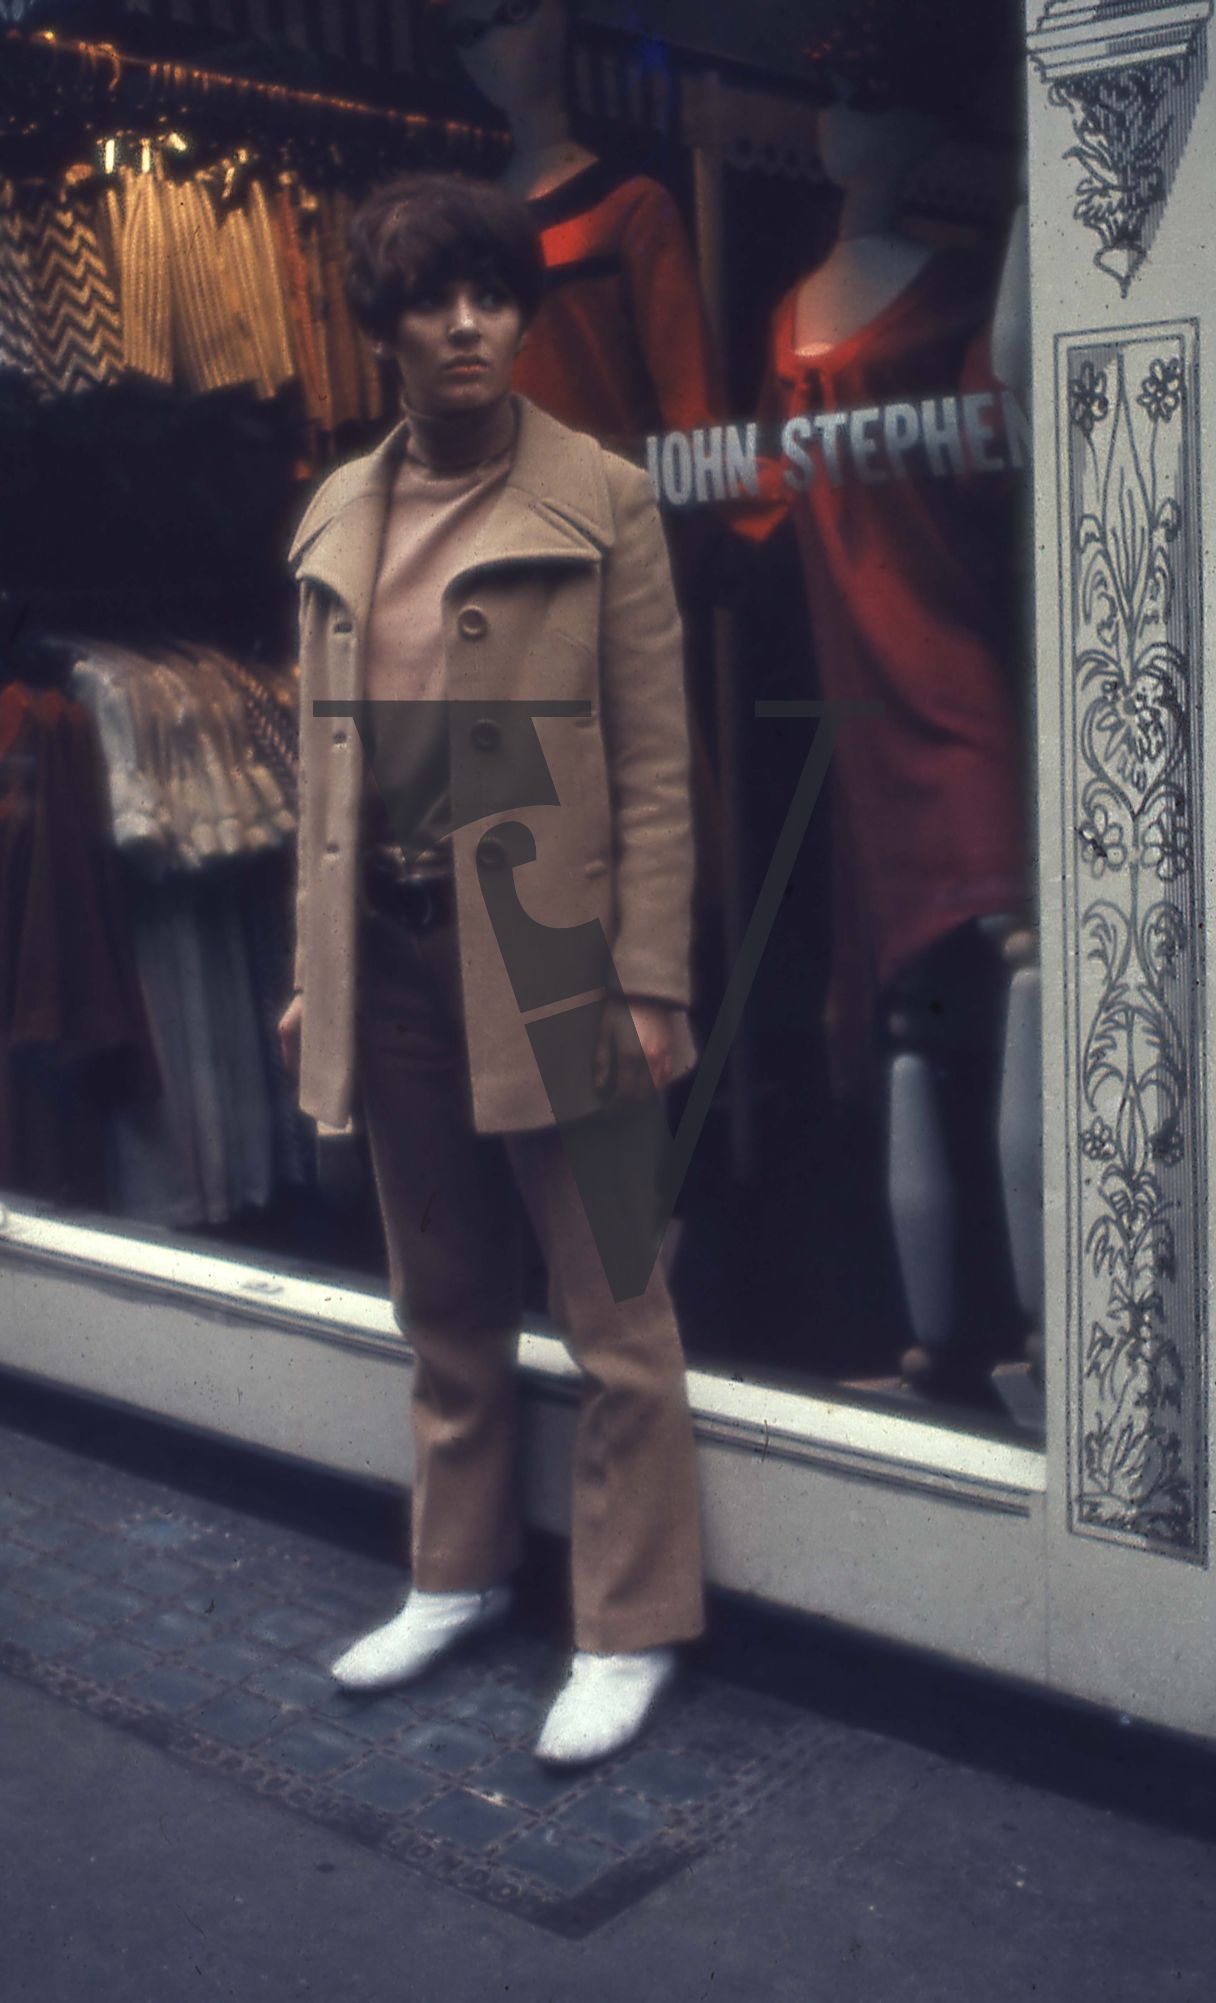 London, Sixties, John Stephen clothes store.